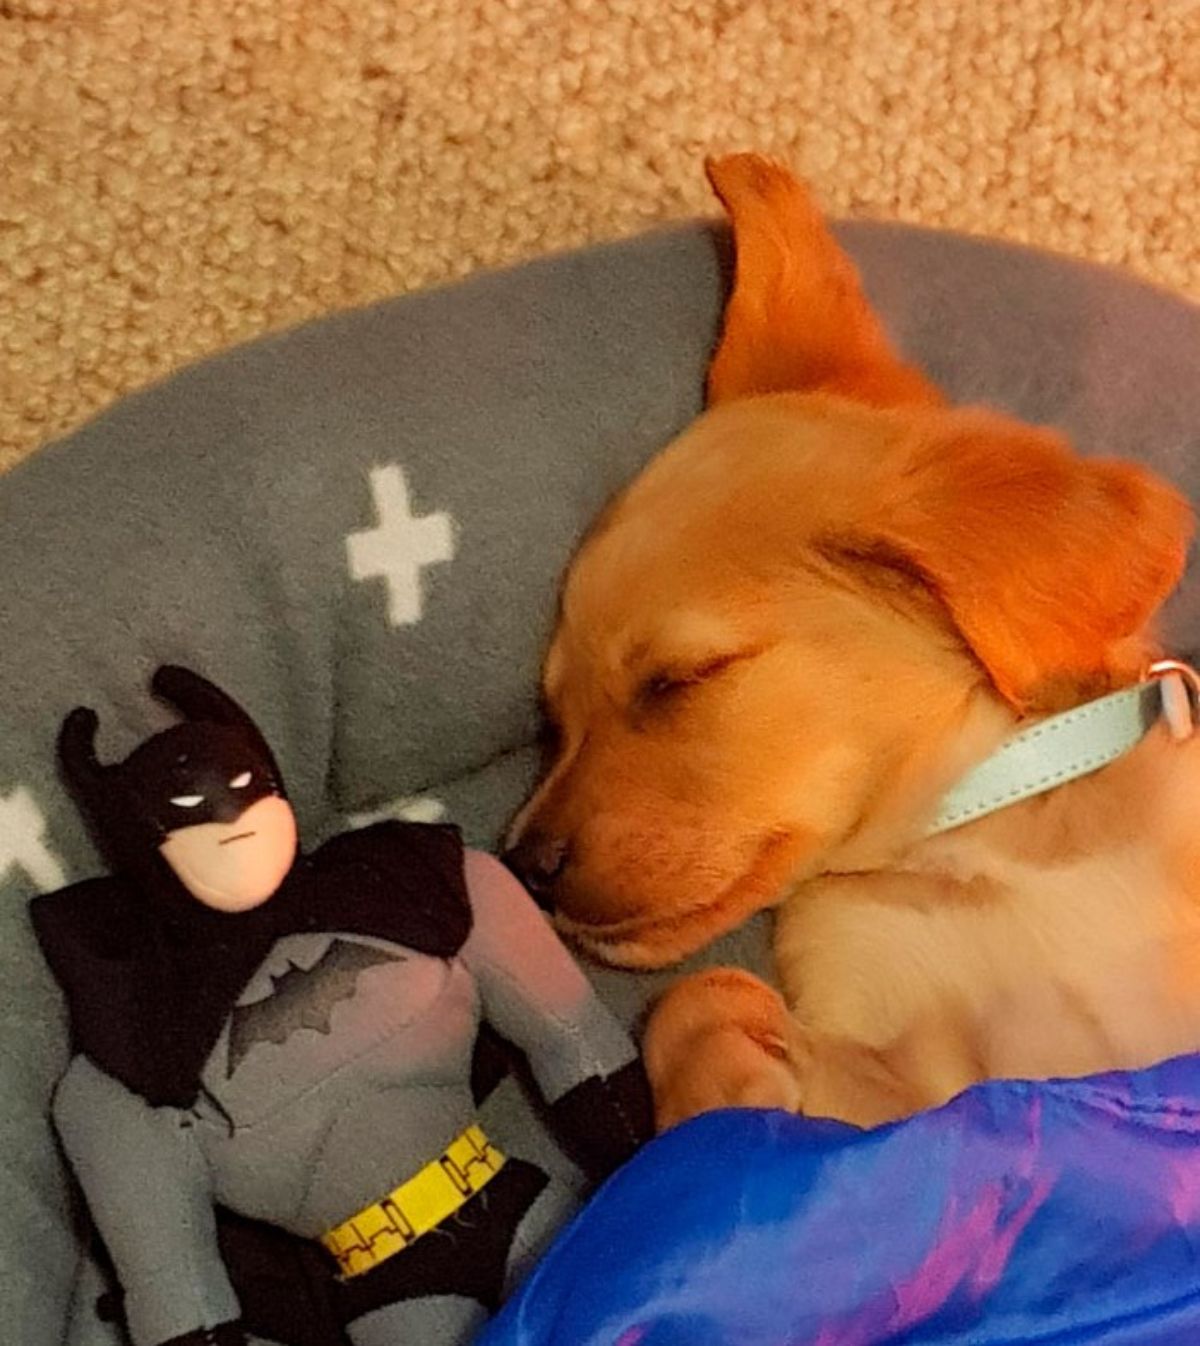 golden retriever puppy sleeping on a grey dog bed under a blue blanket next to a batman stuffed toy